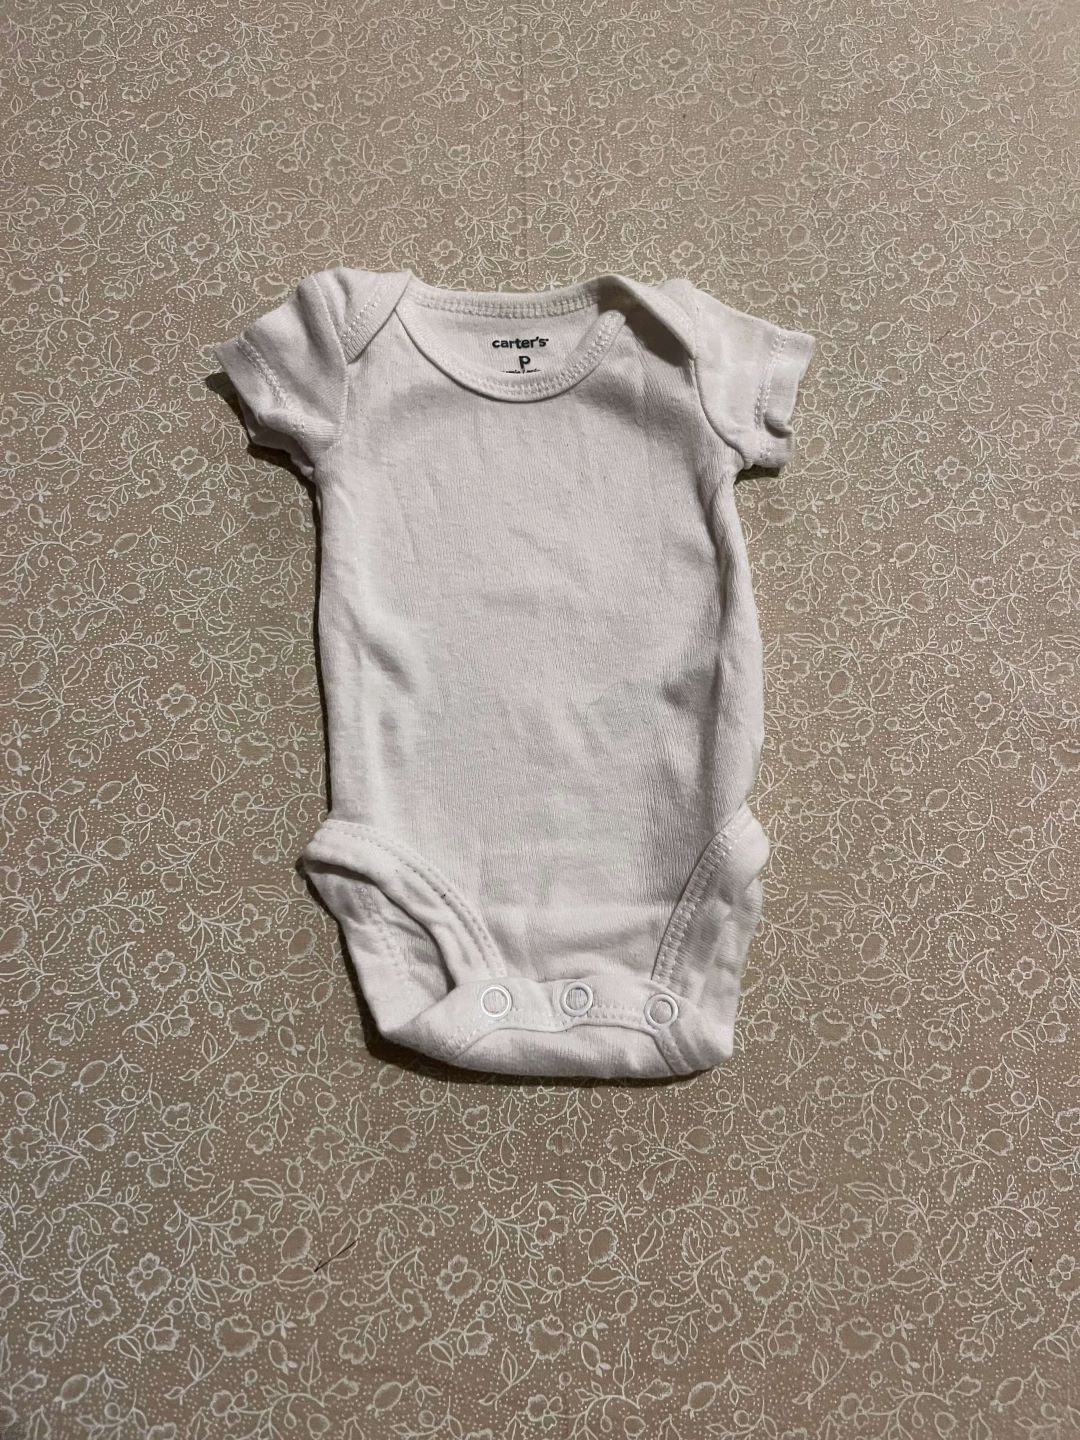 preemie-diaper-shirt-carters-white